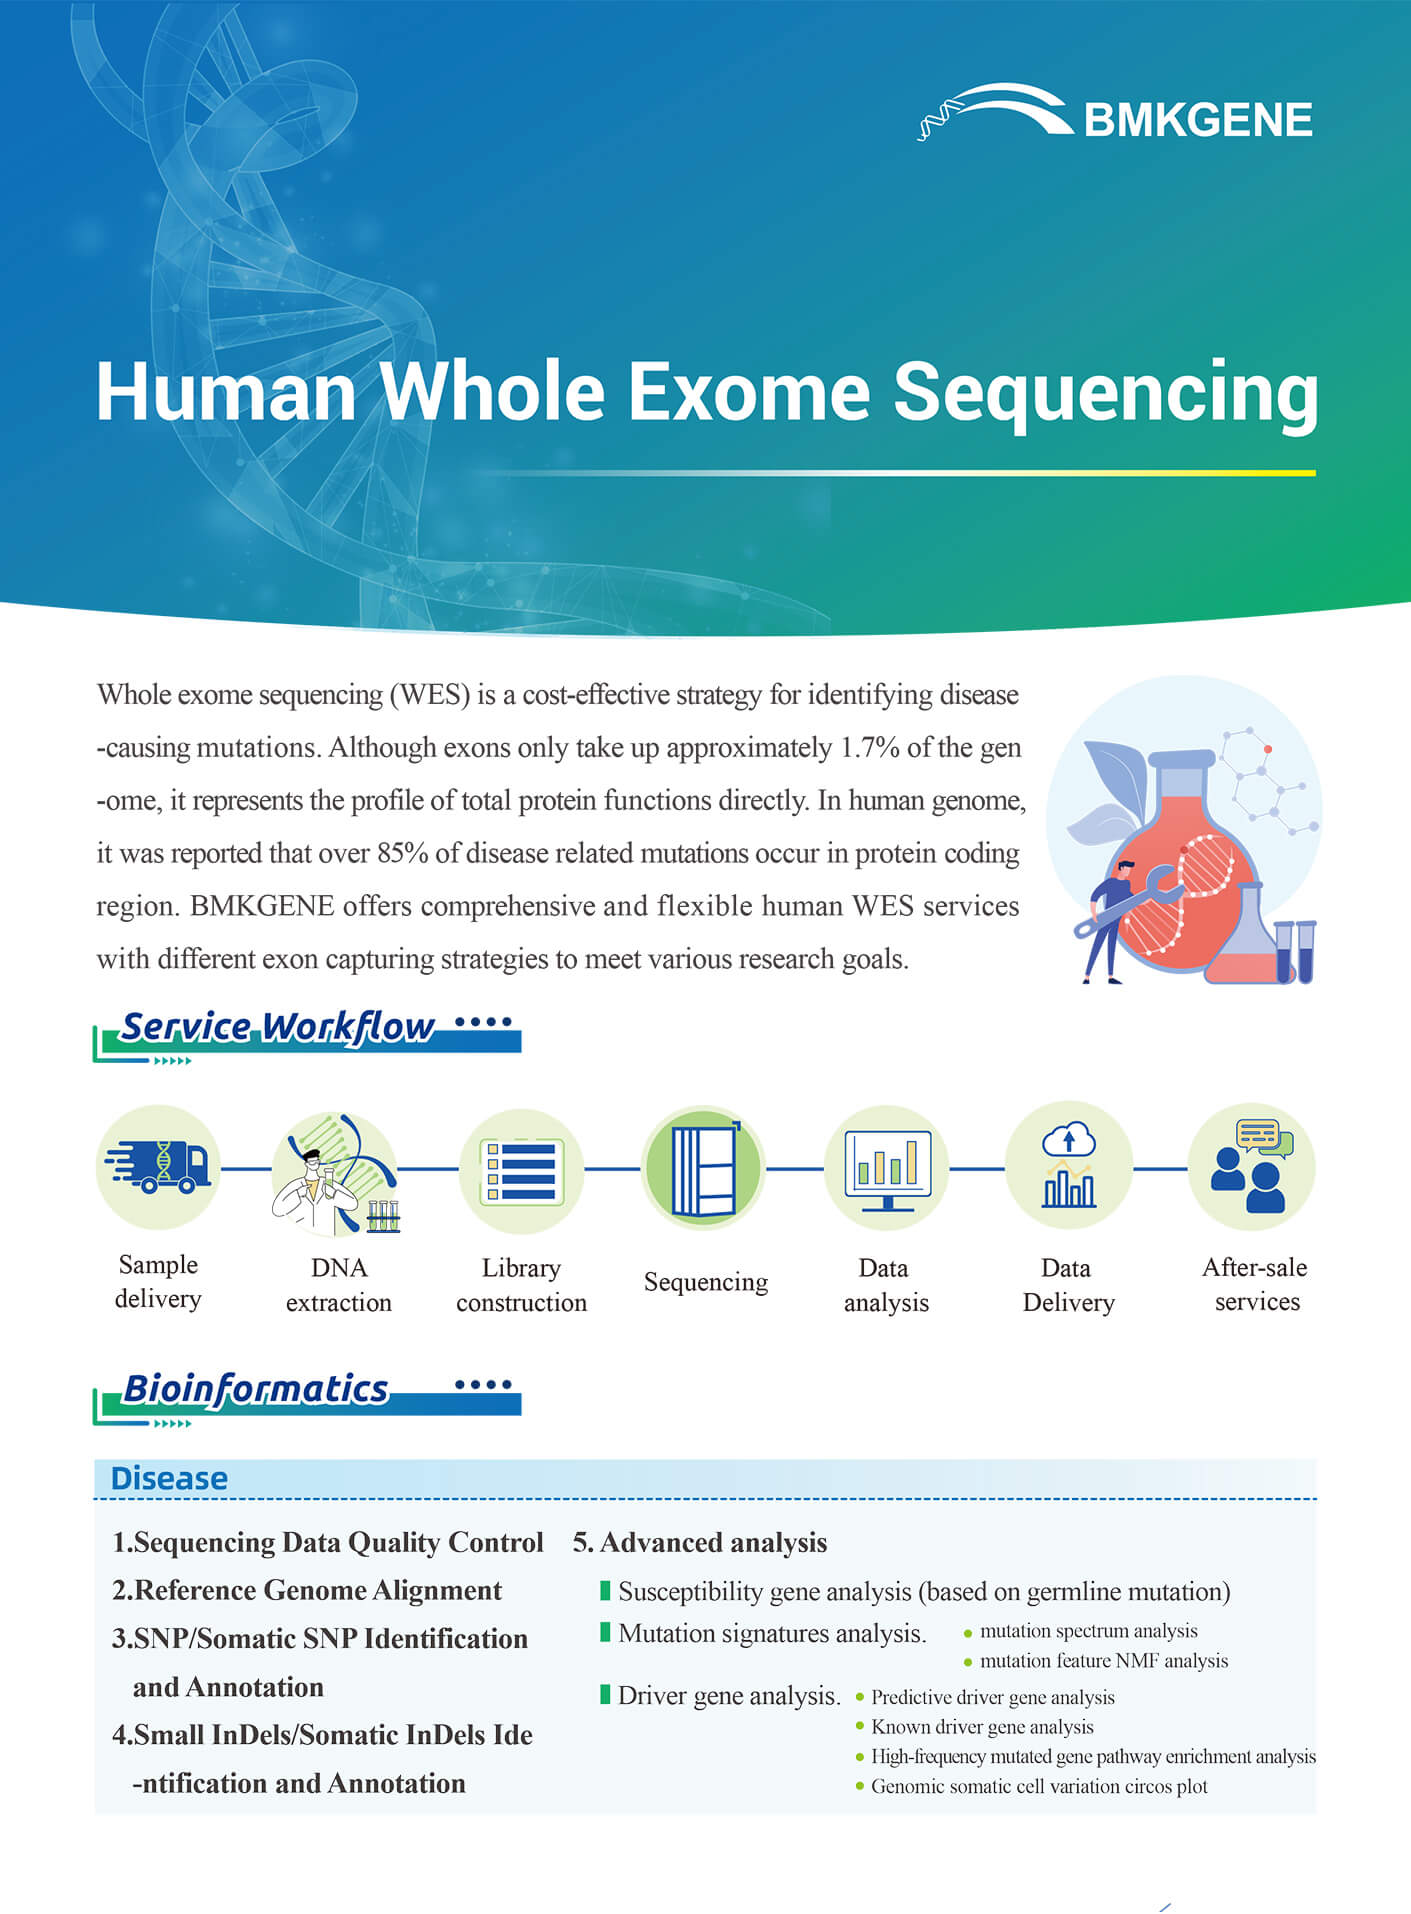 http://www.bmkgene.com/uploads/Human-Whole-Exome-Sequencing-hWES-BMKGENE-2311.pdf